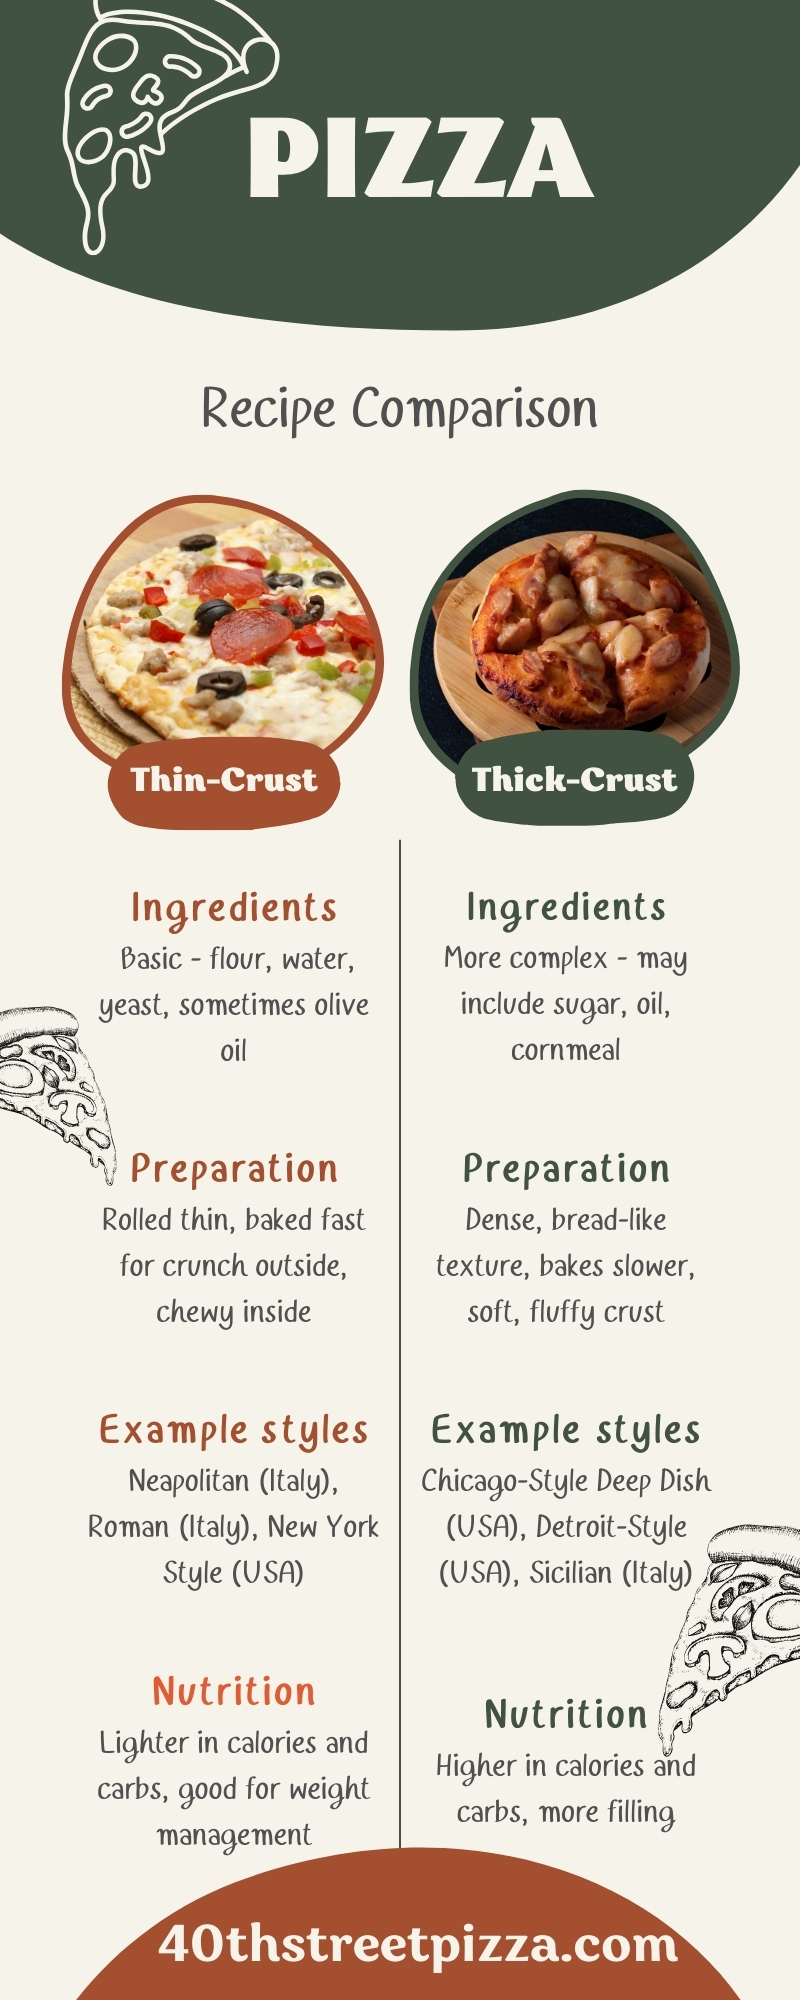 Thin-Crust vs. Thick-Crust Pizza - Let's Compare the Recipe